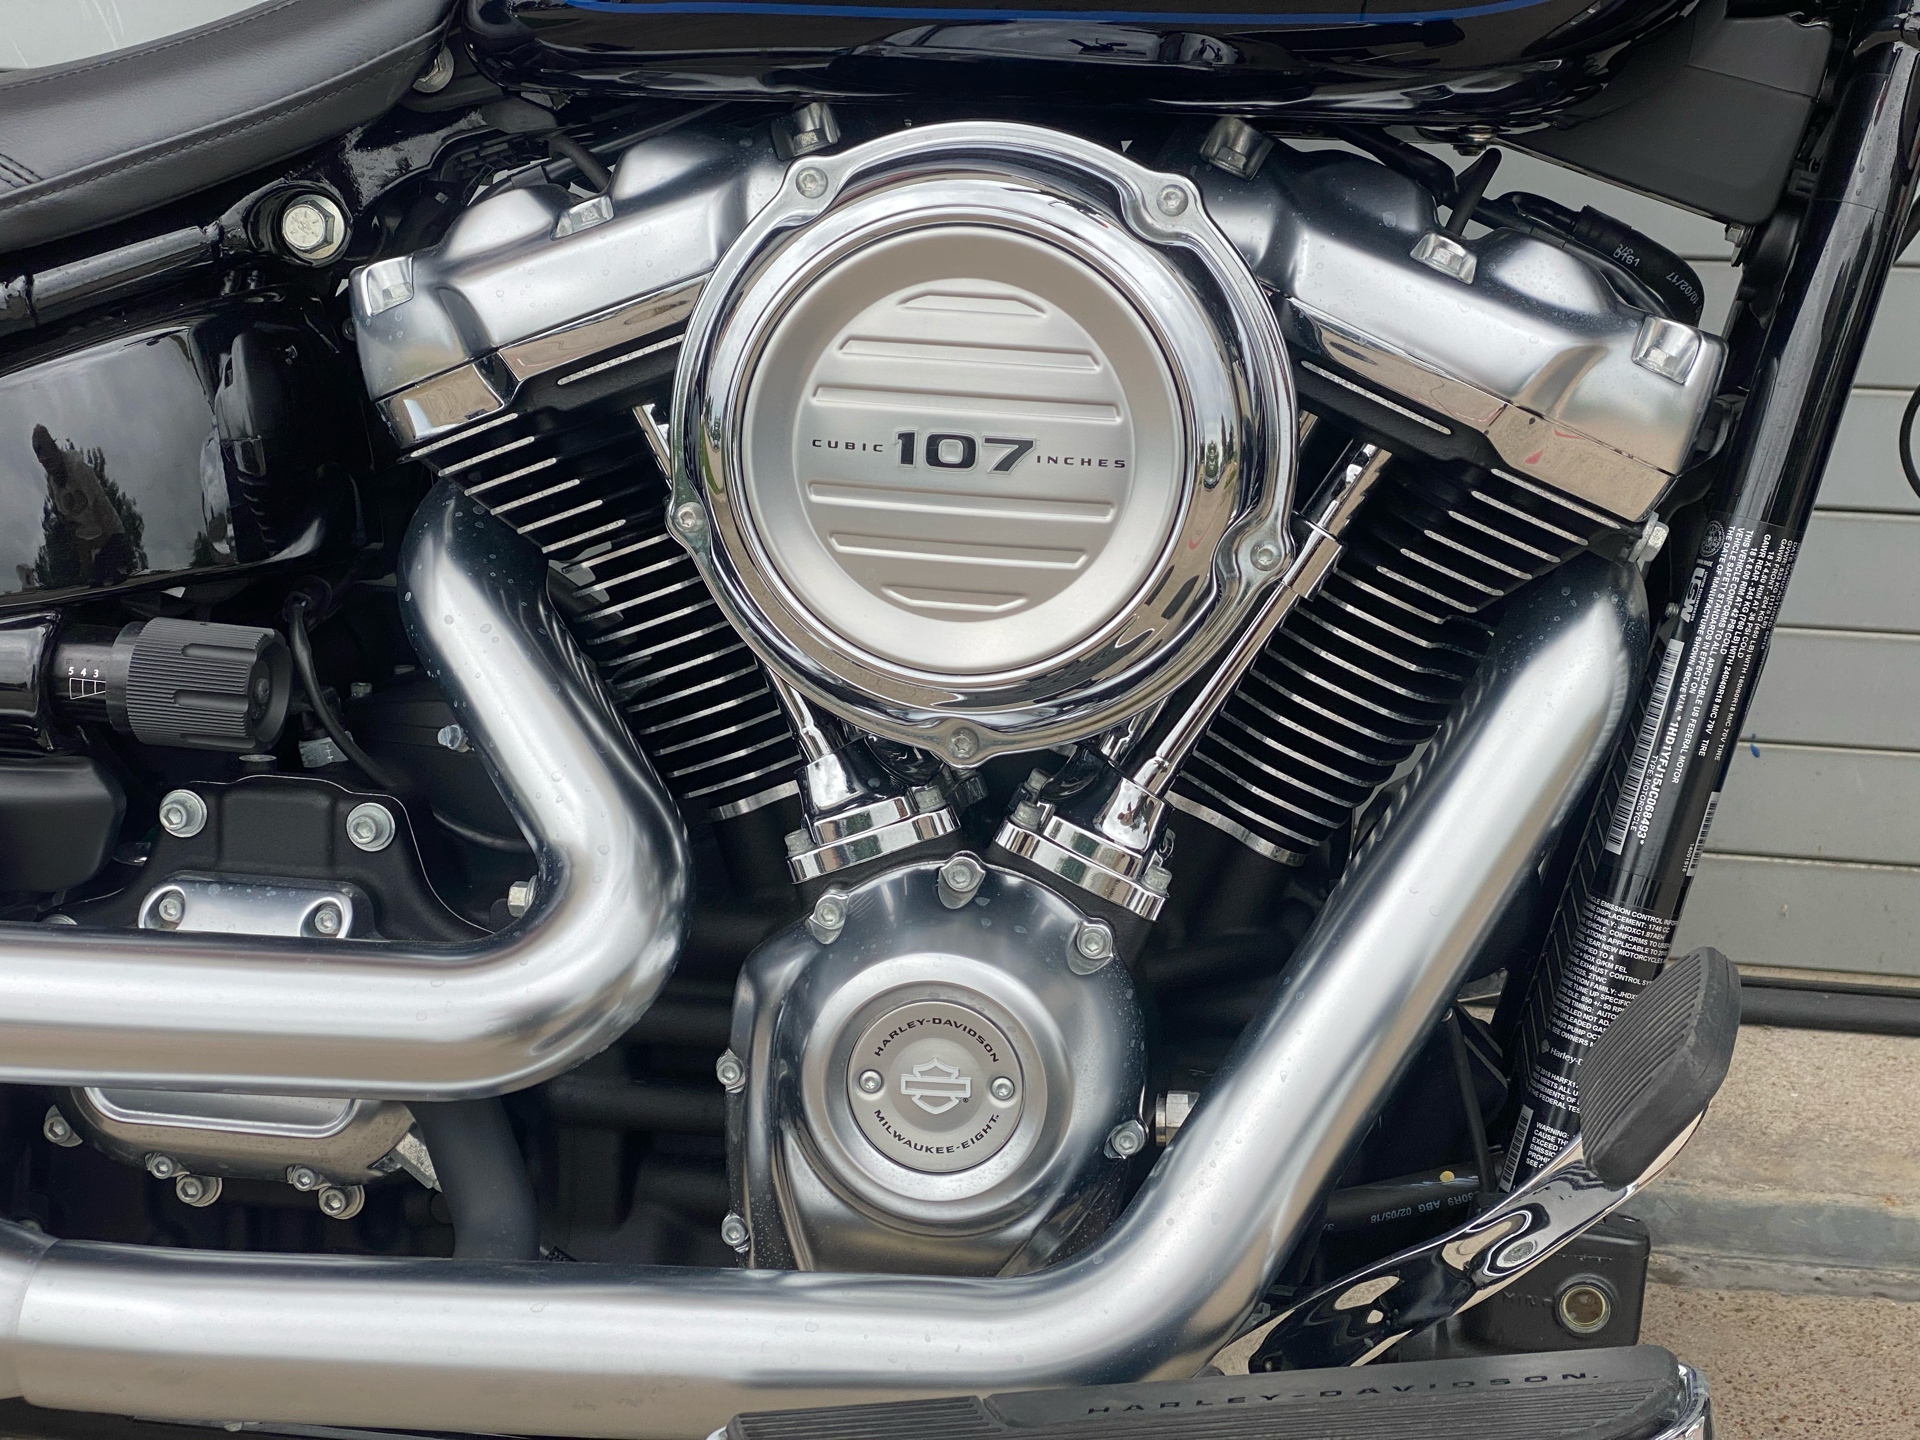 2018 Harley-Davidson Fat Boy® 107 in Grand Prairie, Texas - Photo 7